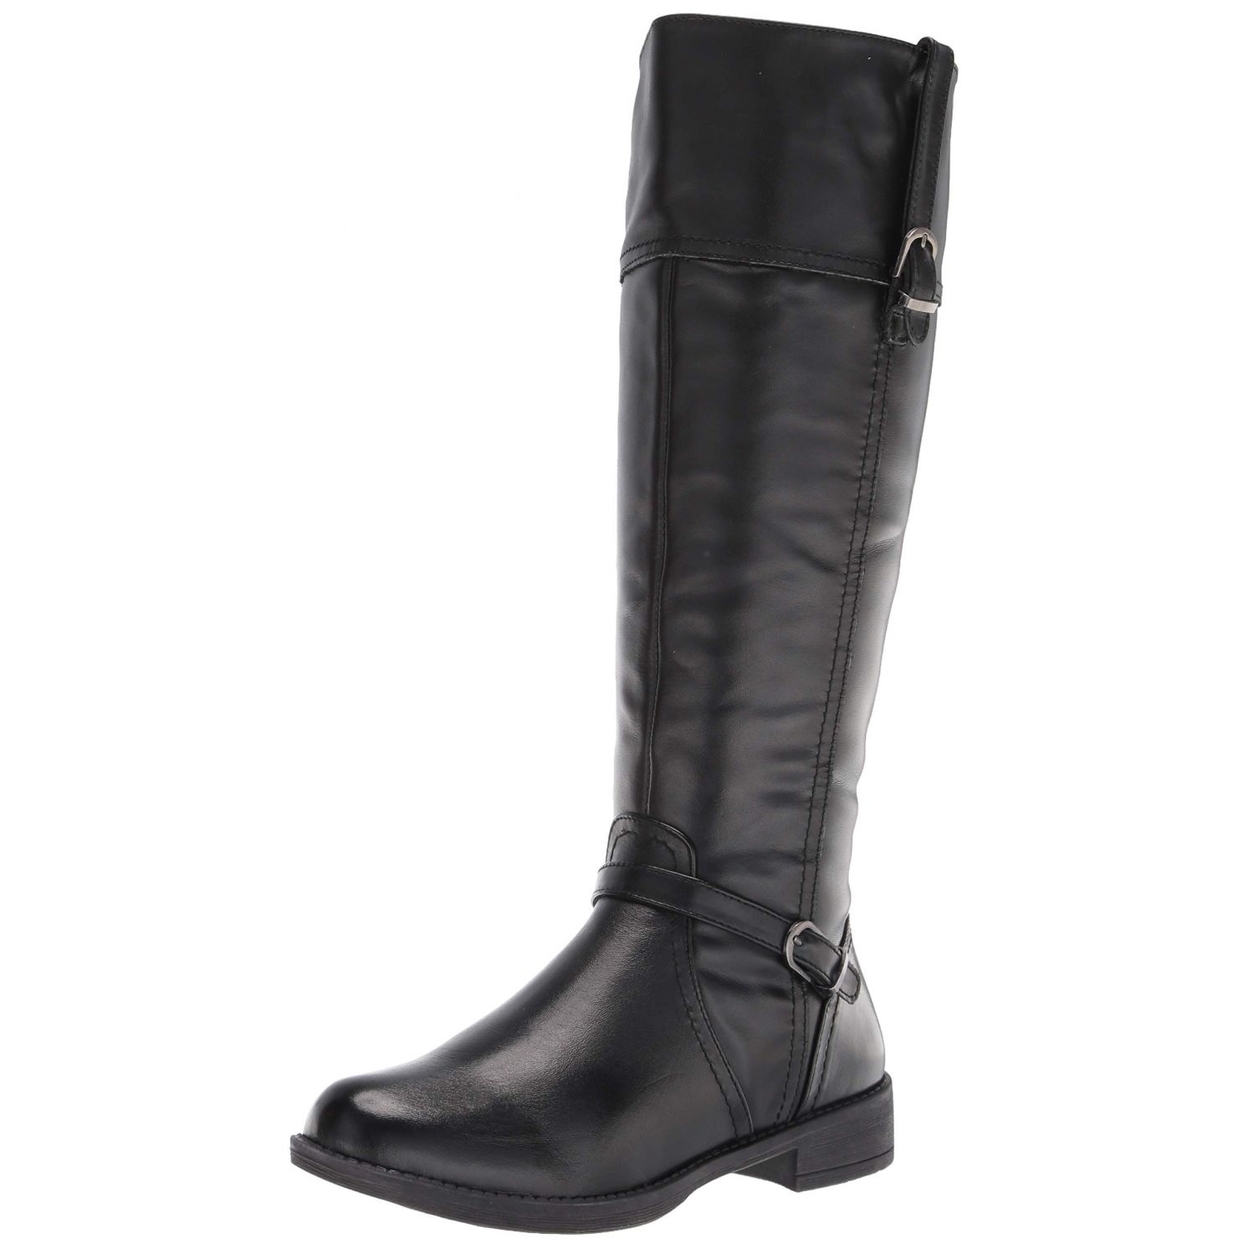 Propet Womens Tasha Zippered Casual Boots Knee High Low Heel 1-2 - Black BROWN - BROWN, 7 X-Wide